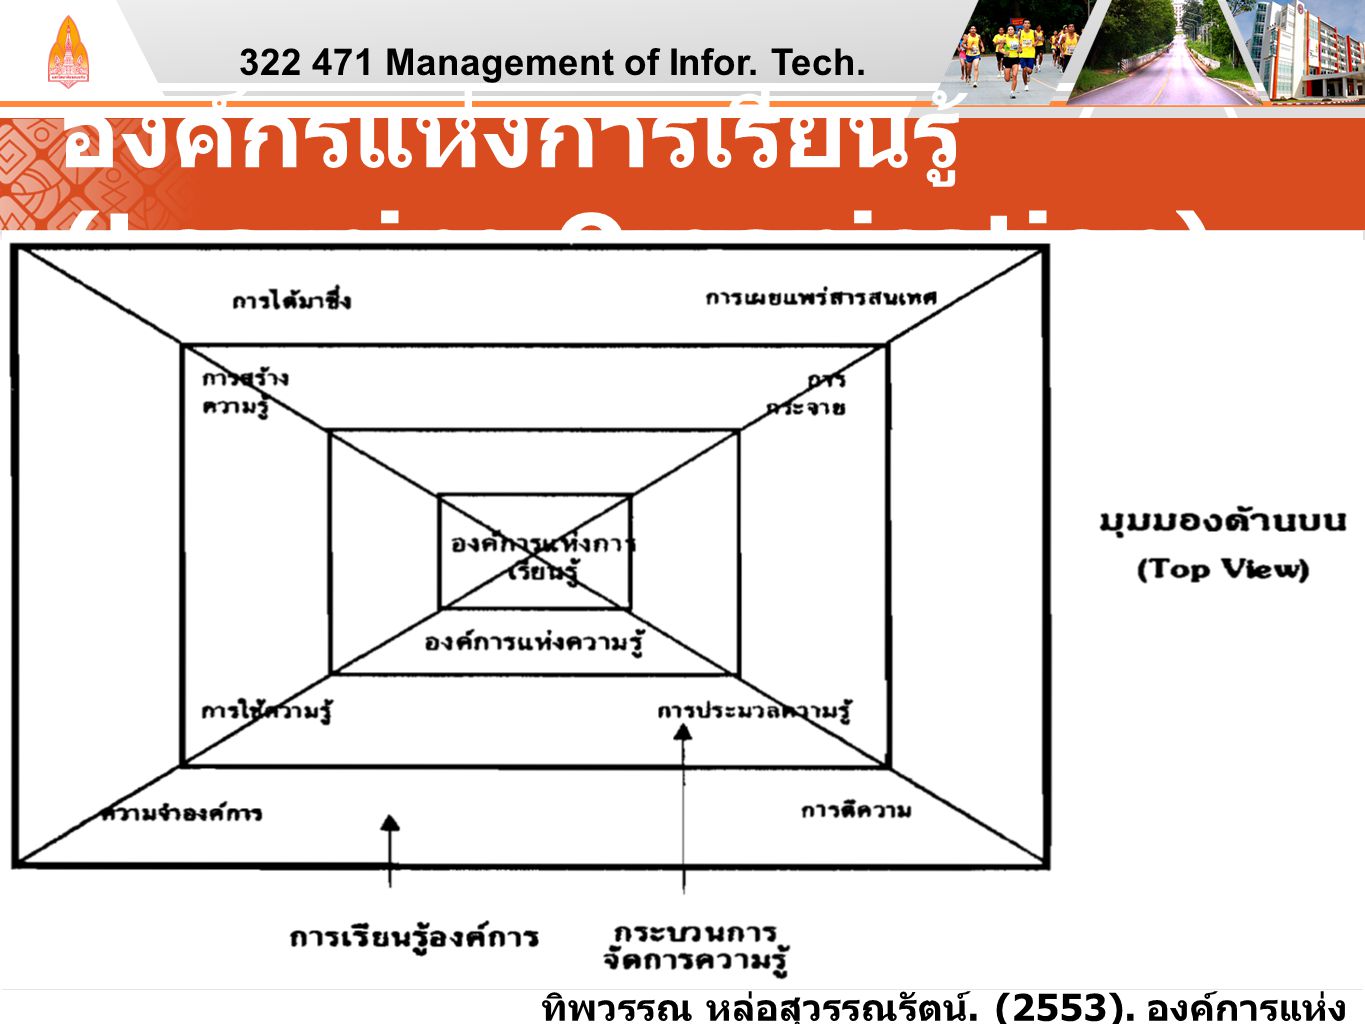 Management of Infor. Tech.